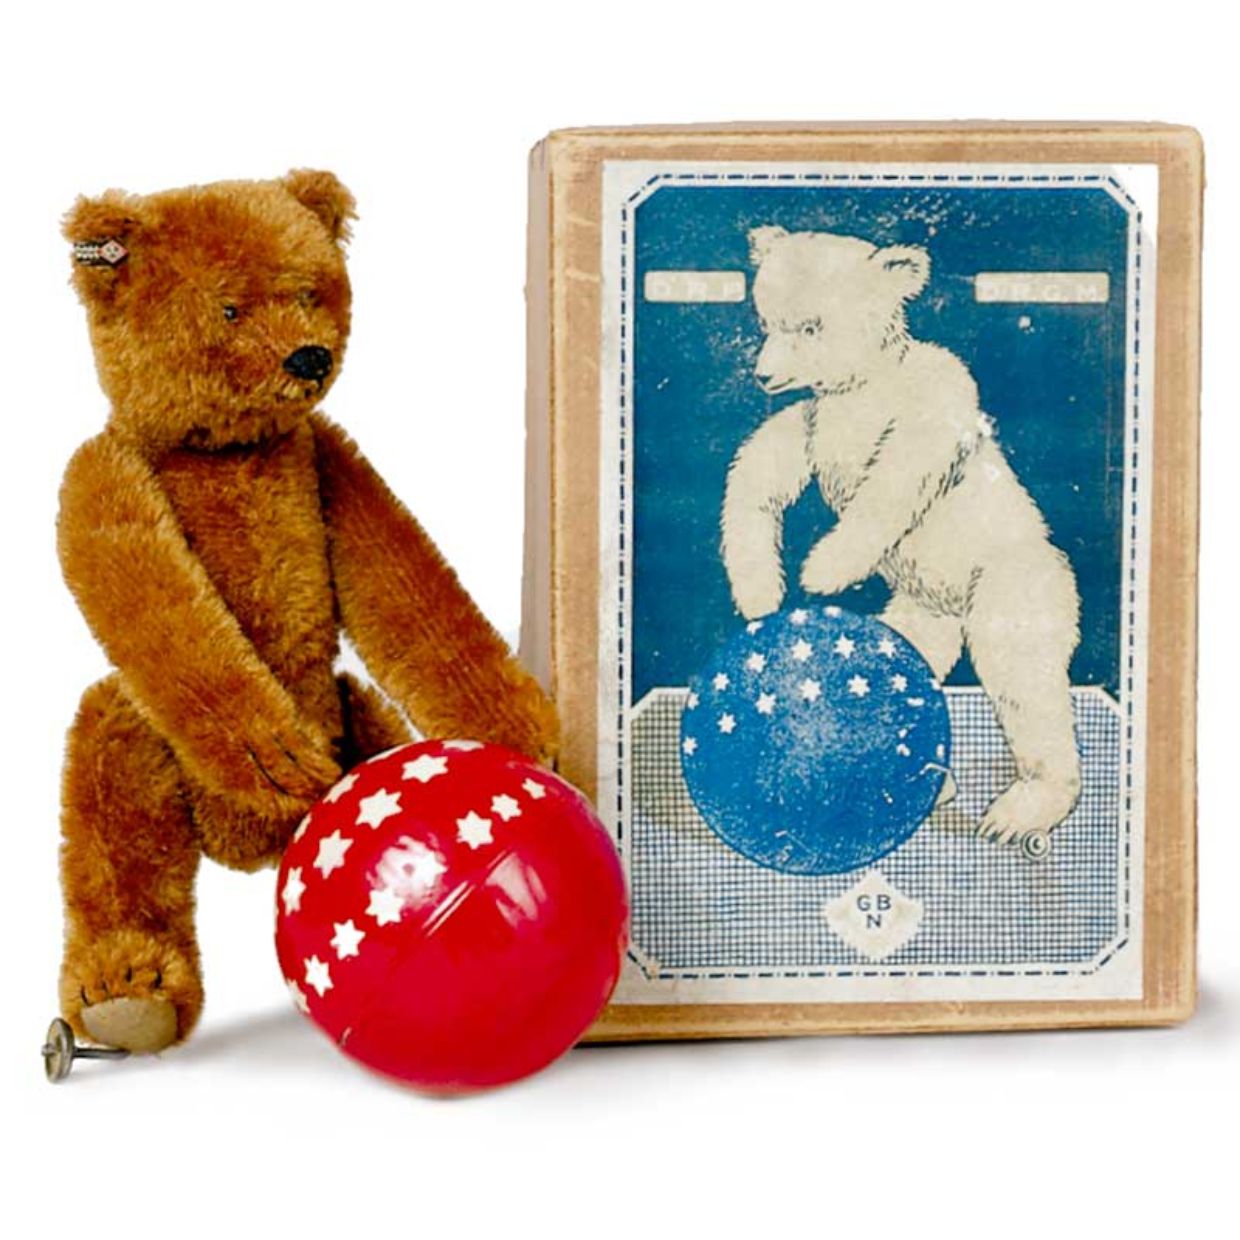 Teddy bears 2, 1910, Germany